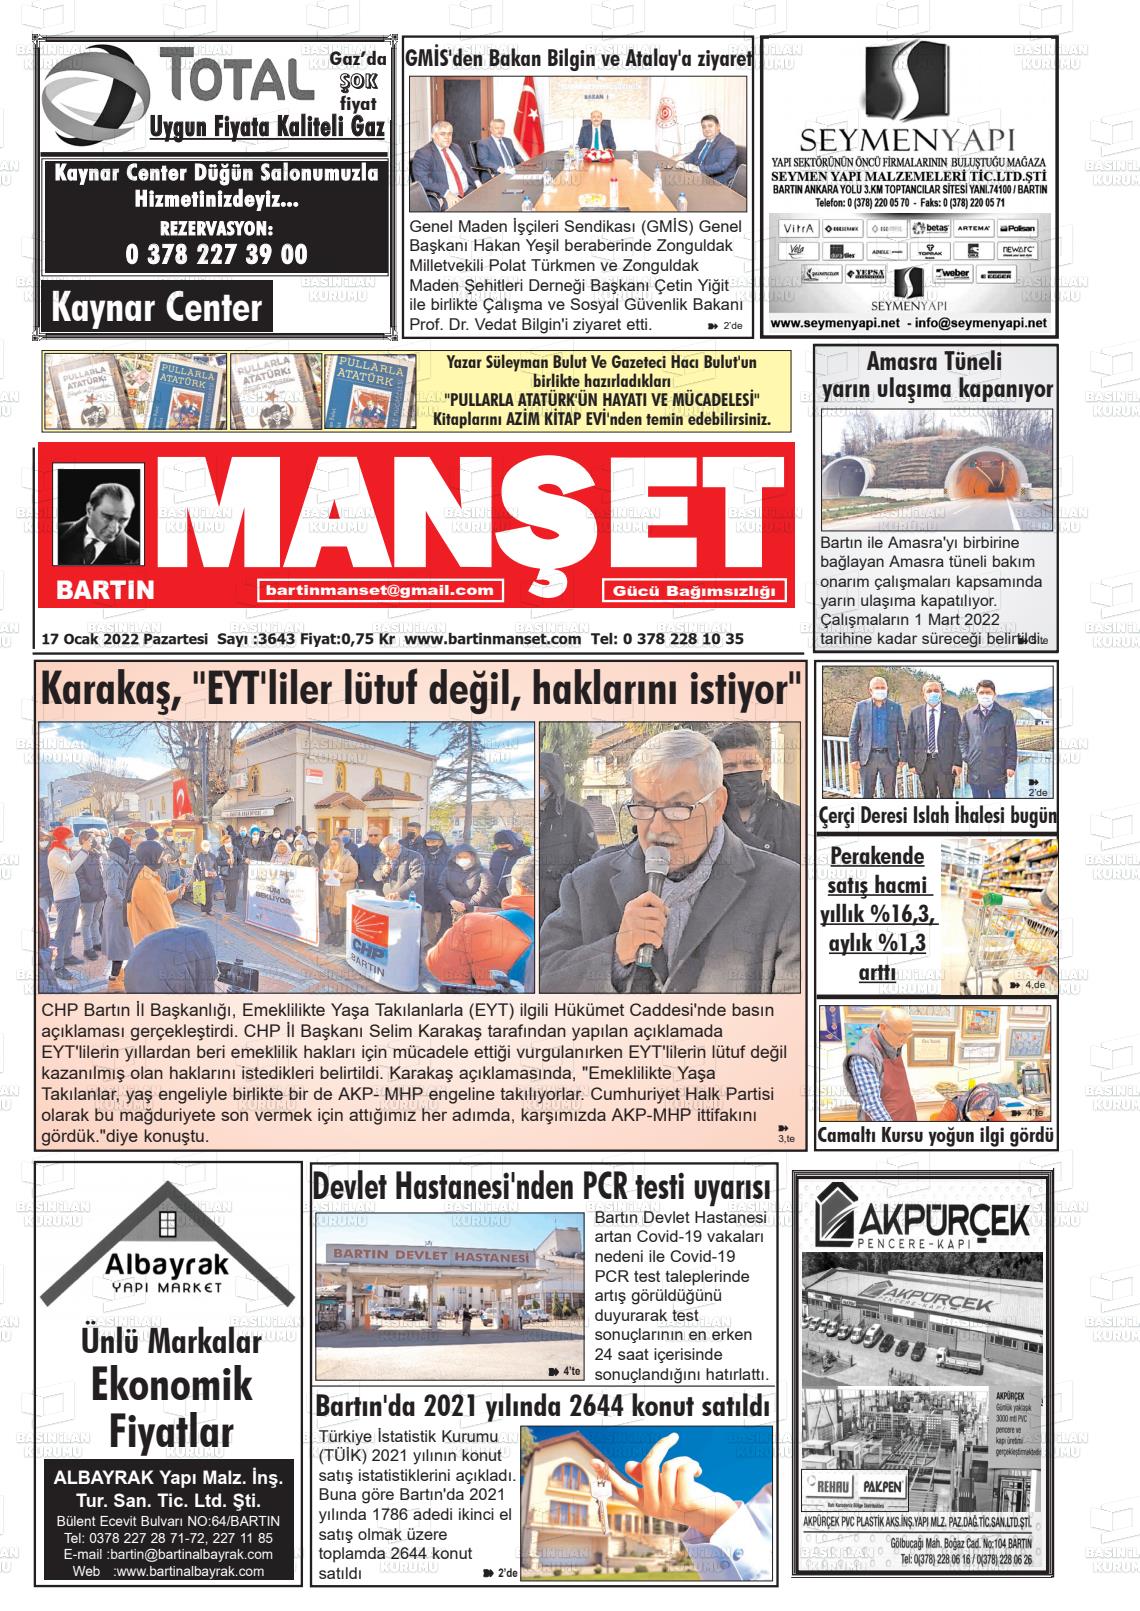 17 Ocak 2022 Bartın Manşet Gazete Manşeti